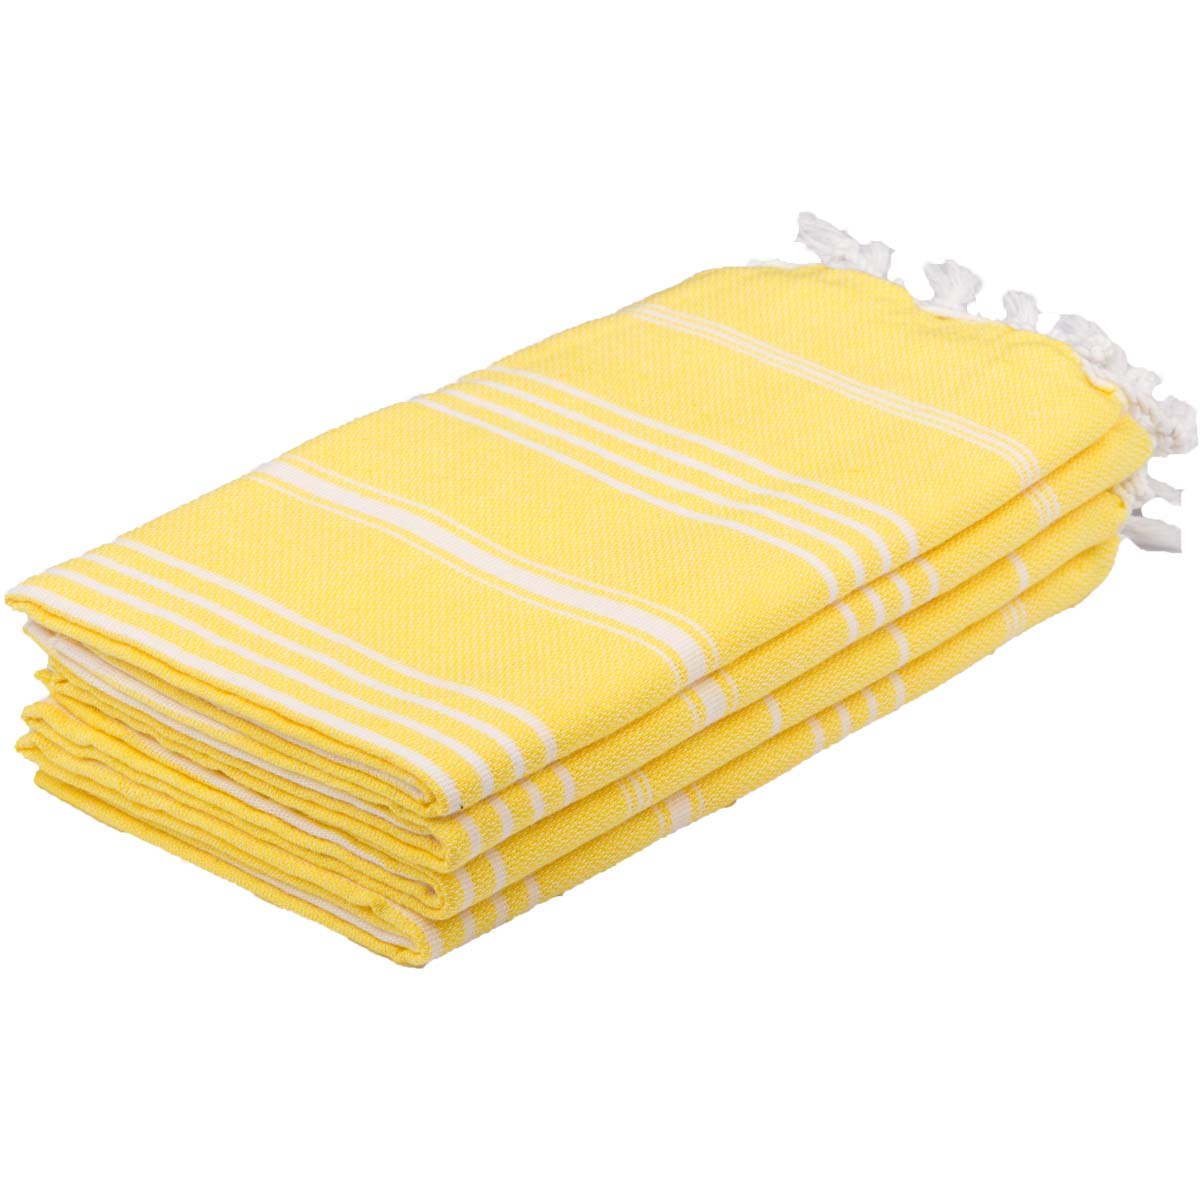 yellow towels set